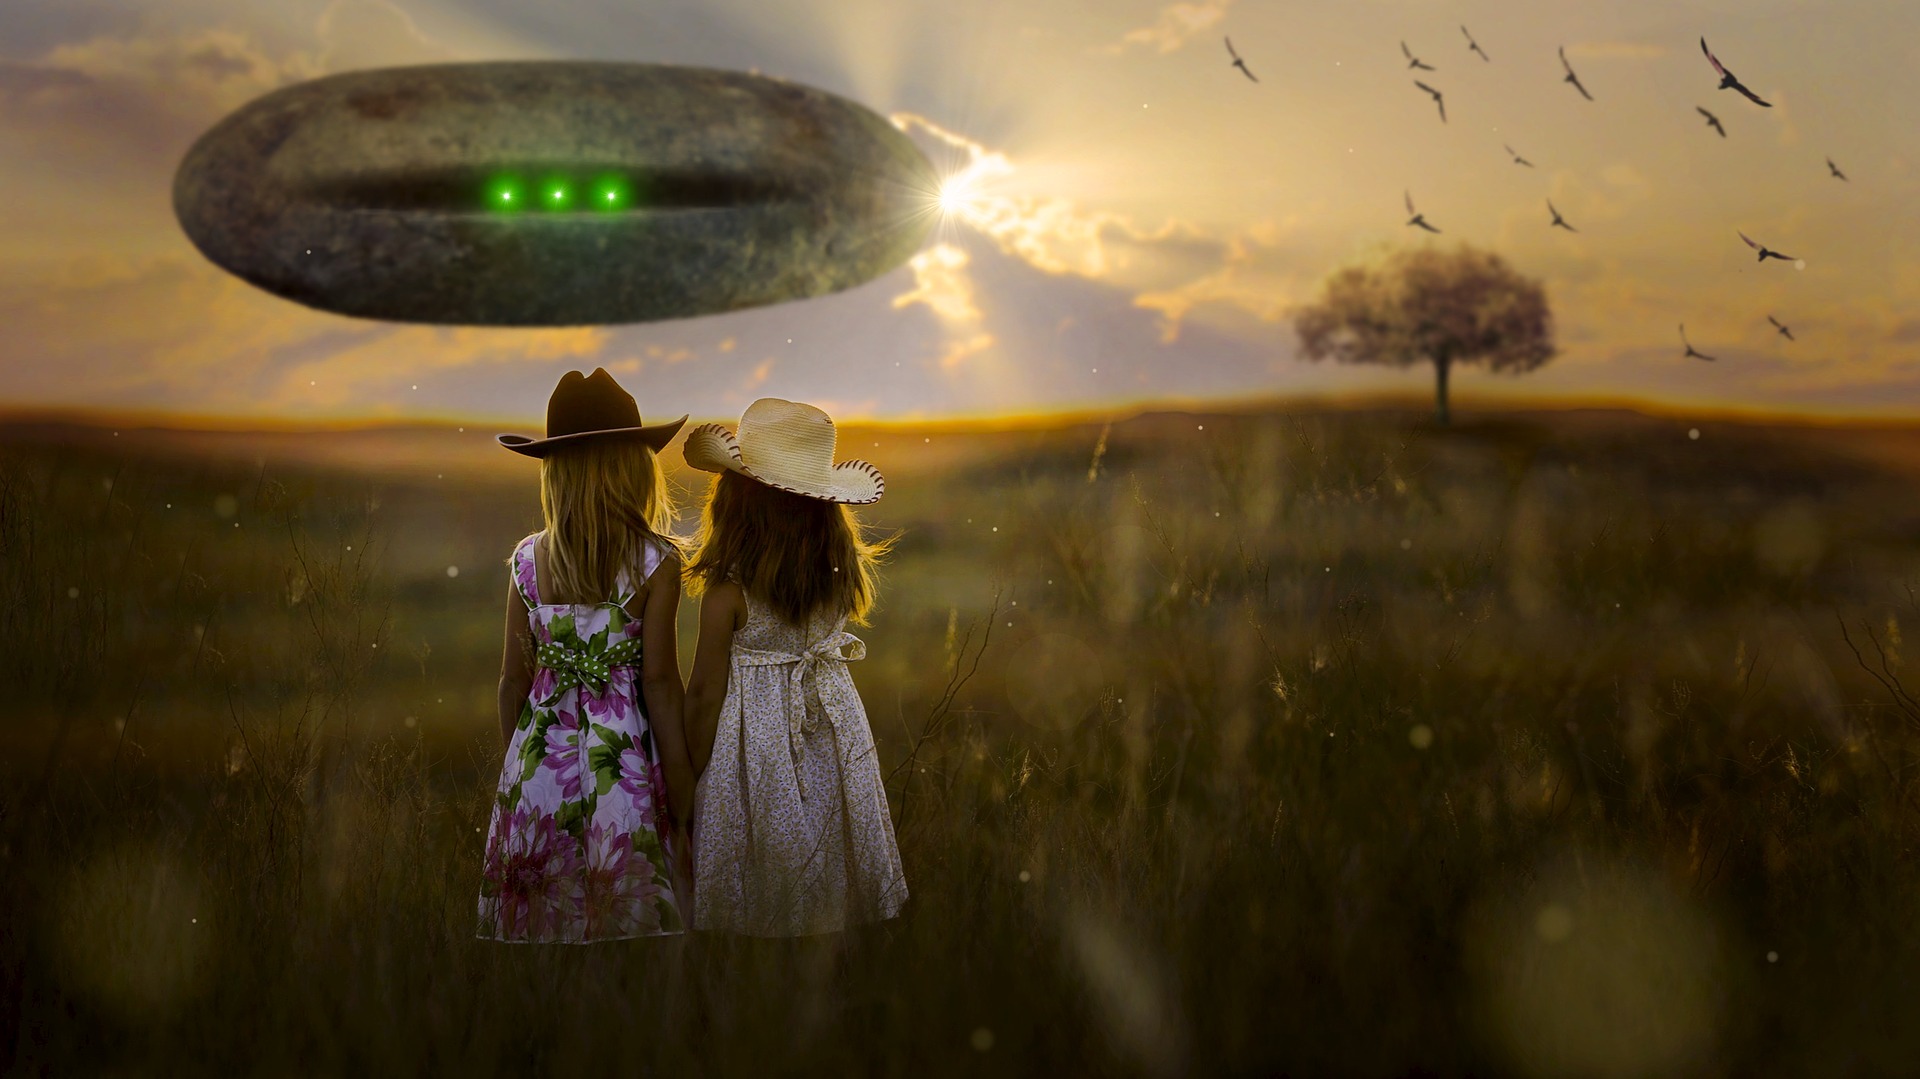 Girls walking in crop circle field with UFO.